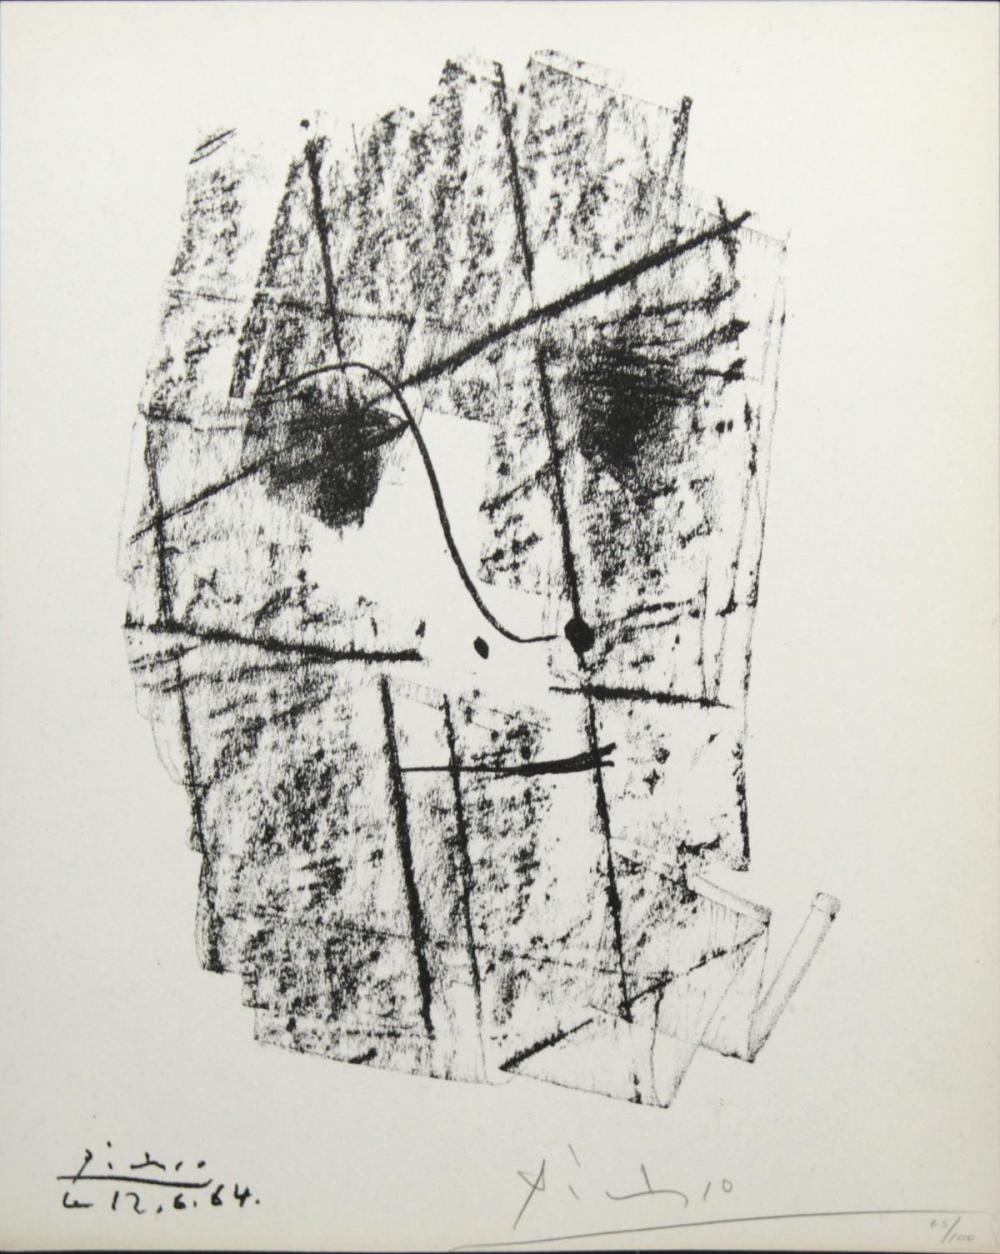 Pablo Picasso - Cubist Portrait of Kahnweiler